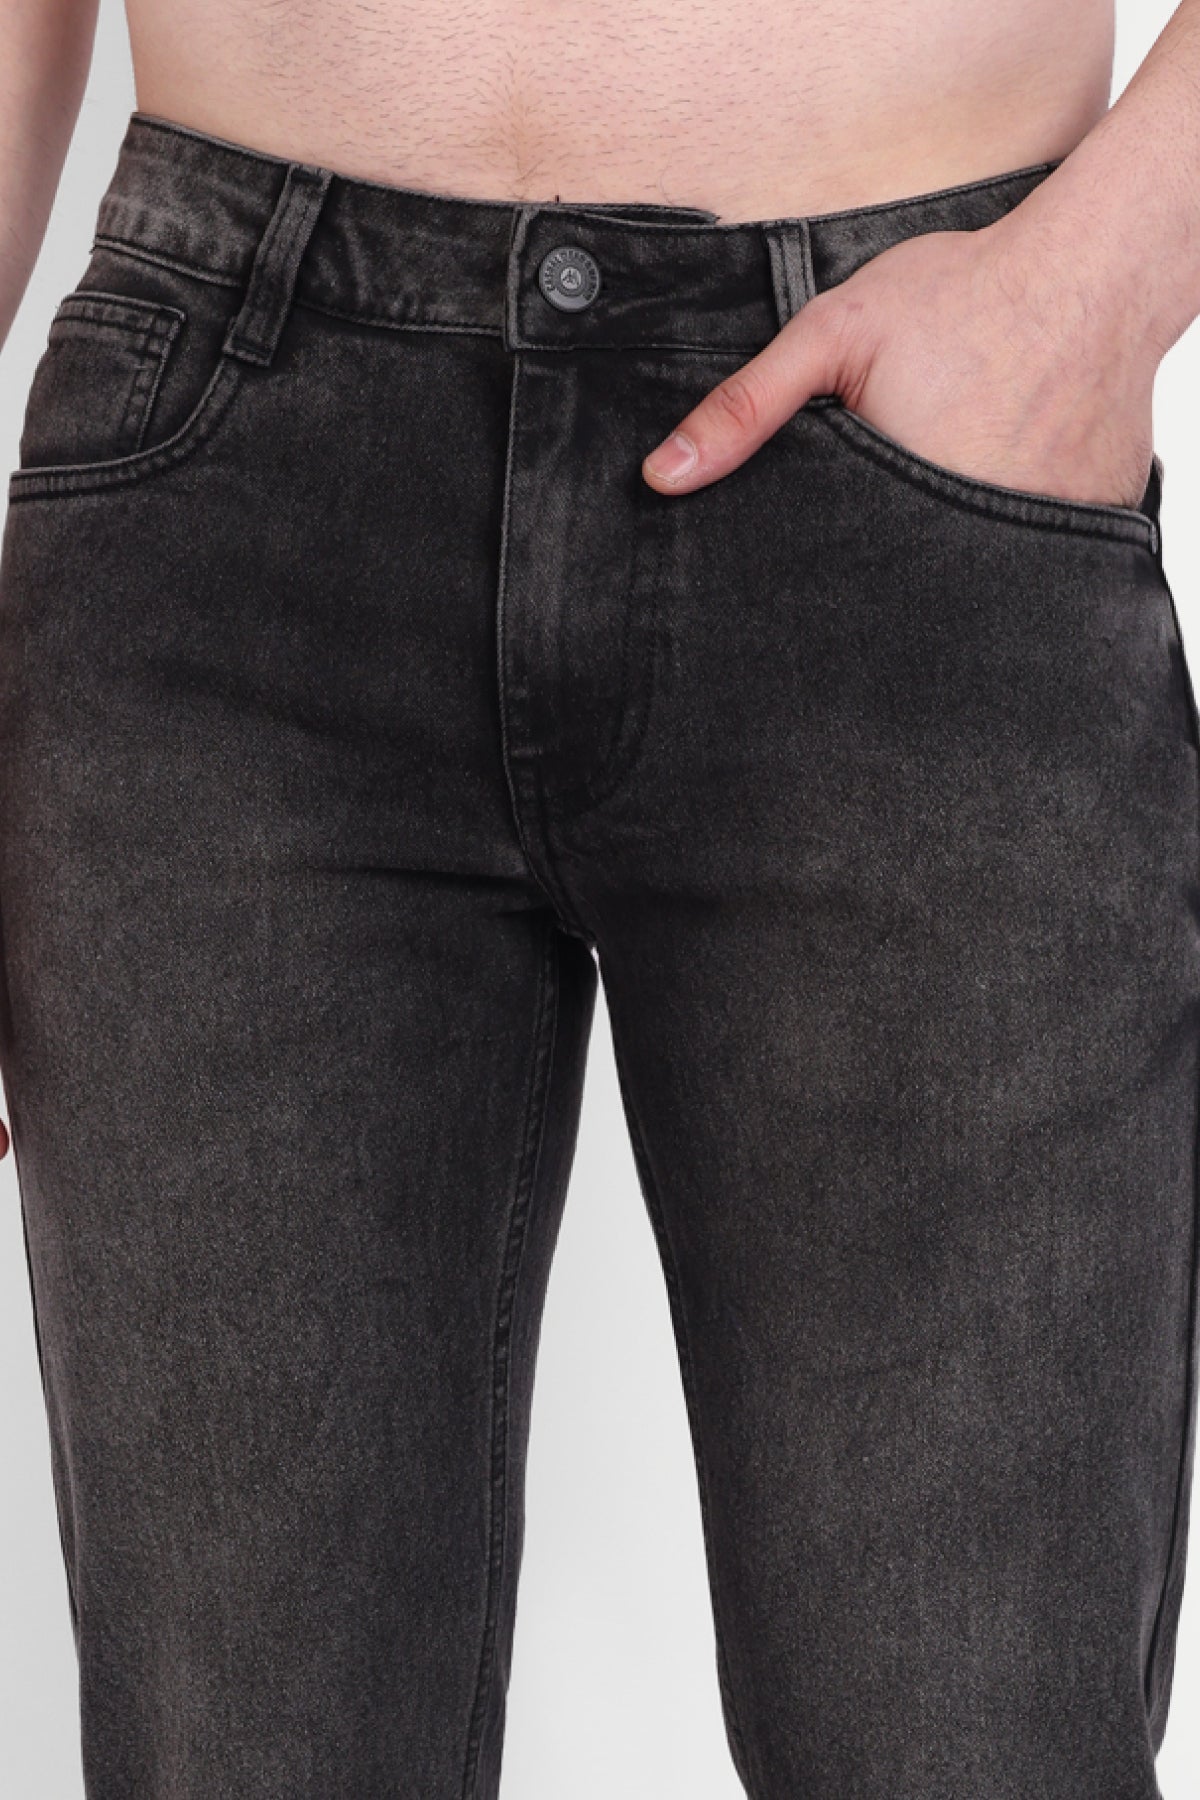 Men's Retro Black Slim Fit Jeans